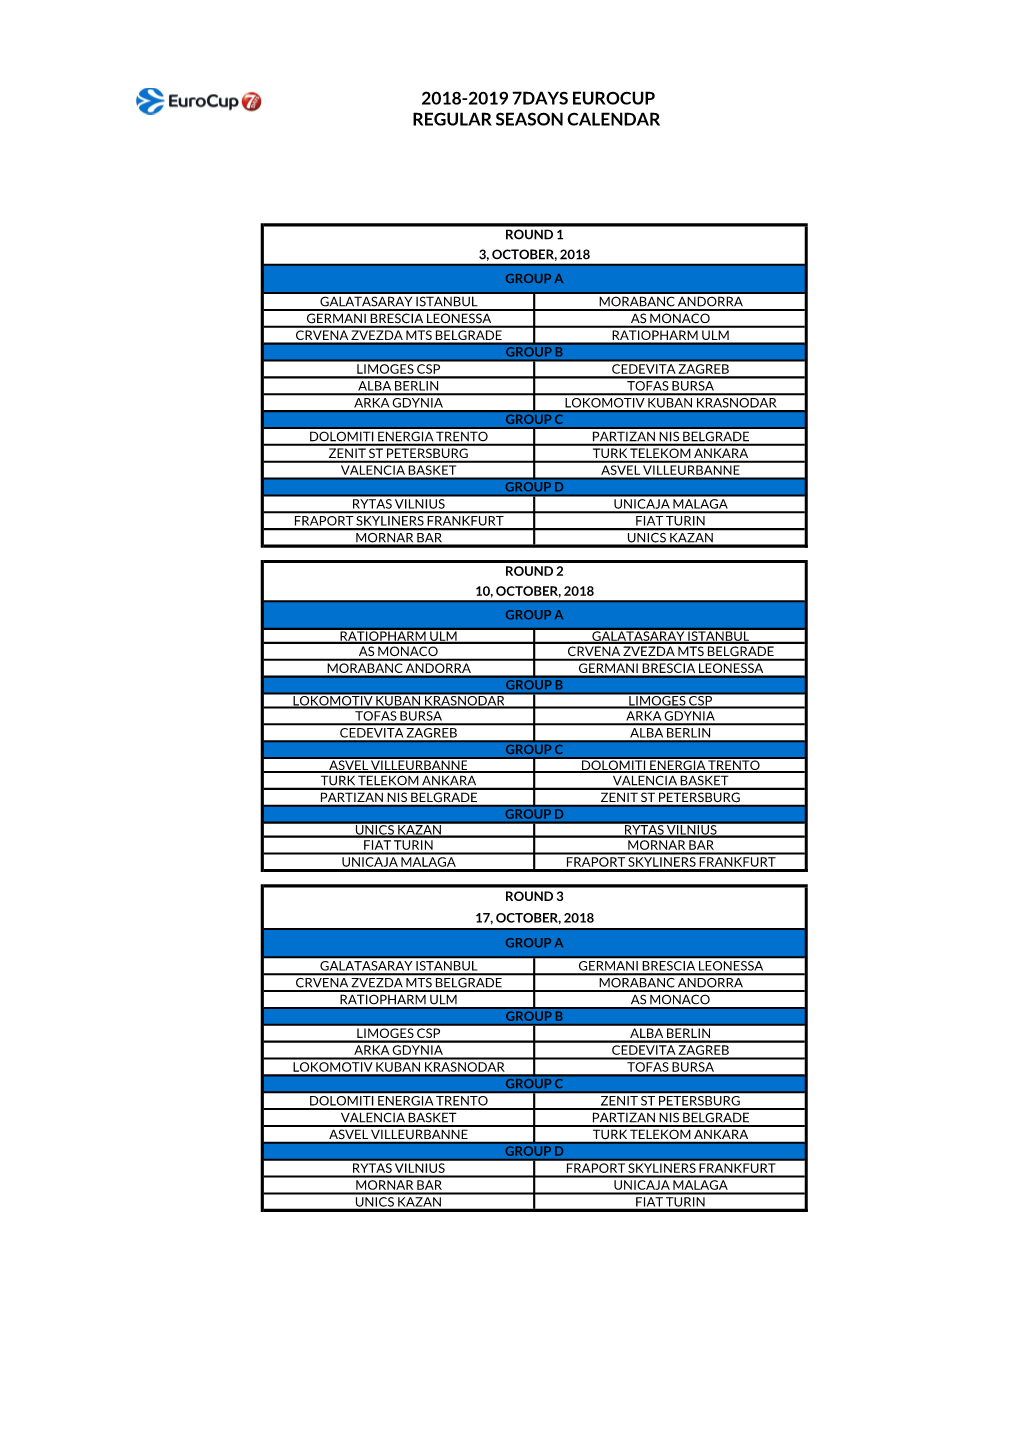 2018-2019 7Days Eurocup Regular Season Calendar